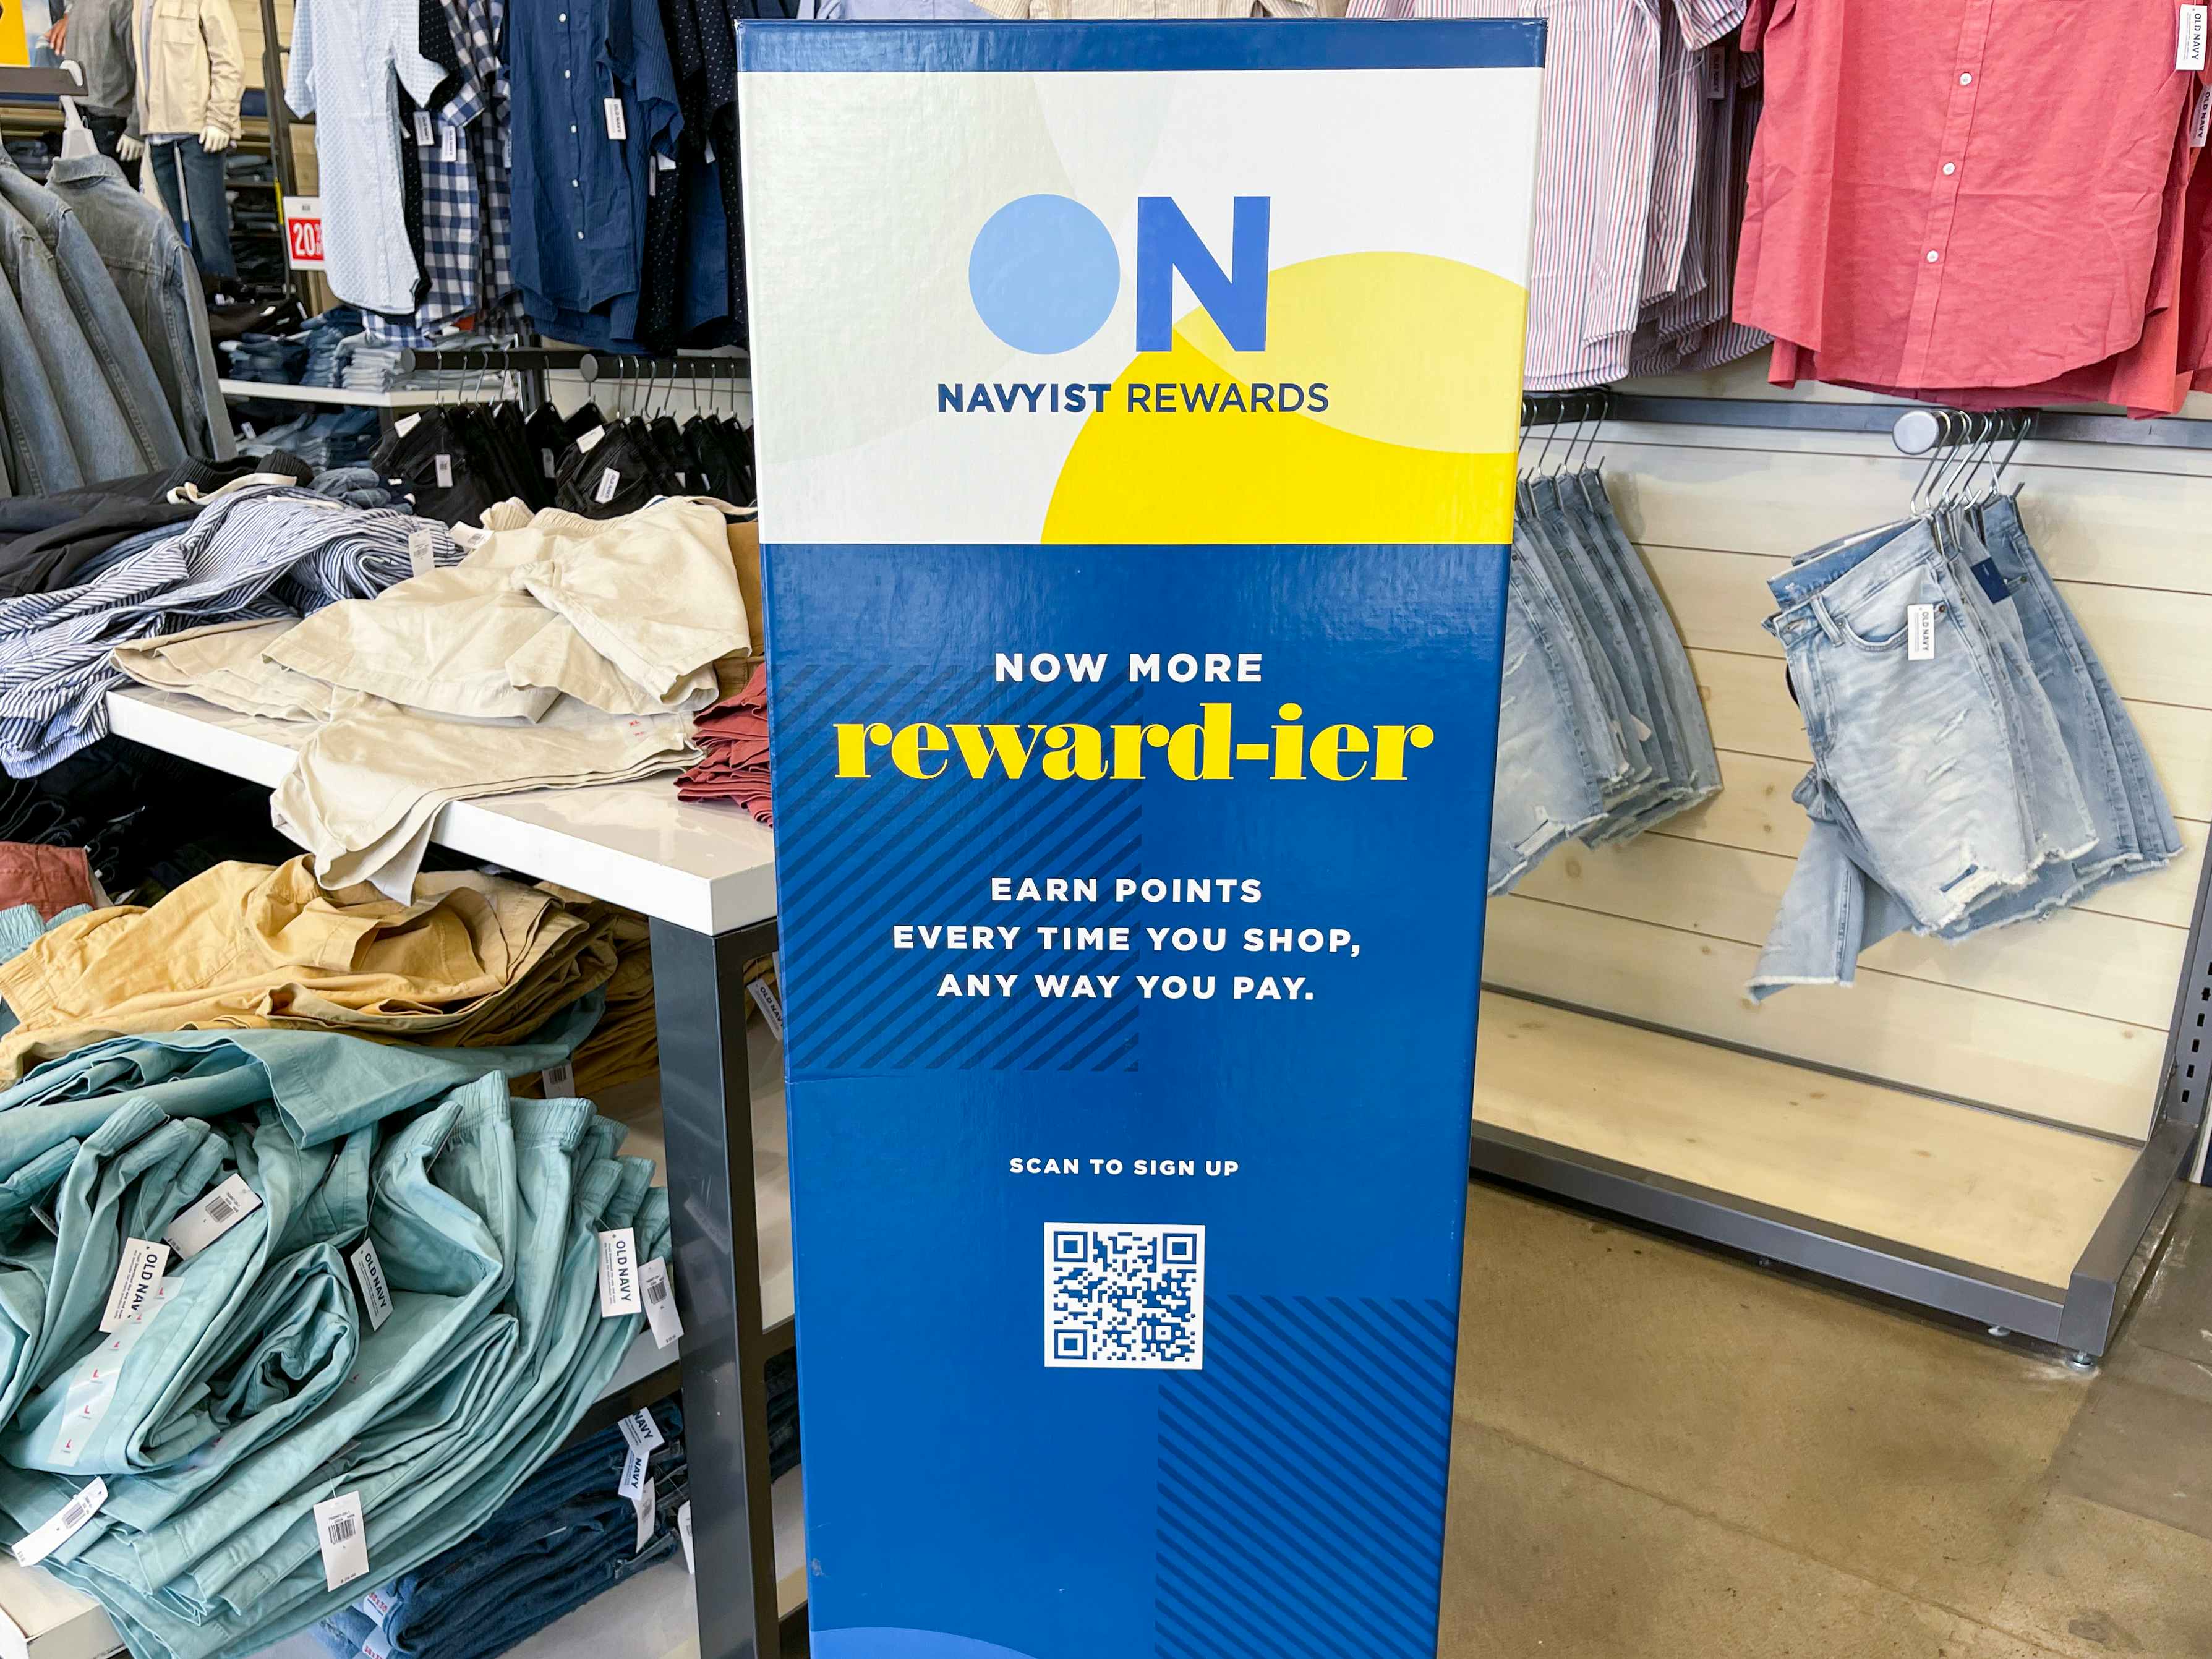 Old Navy reward program sign inside an Old Navy store.